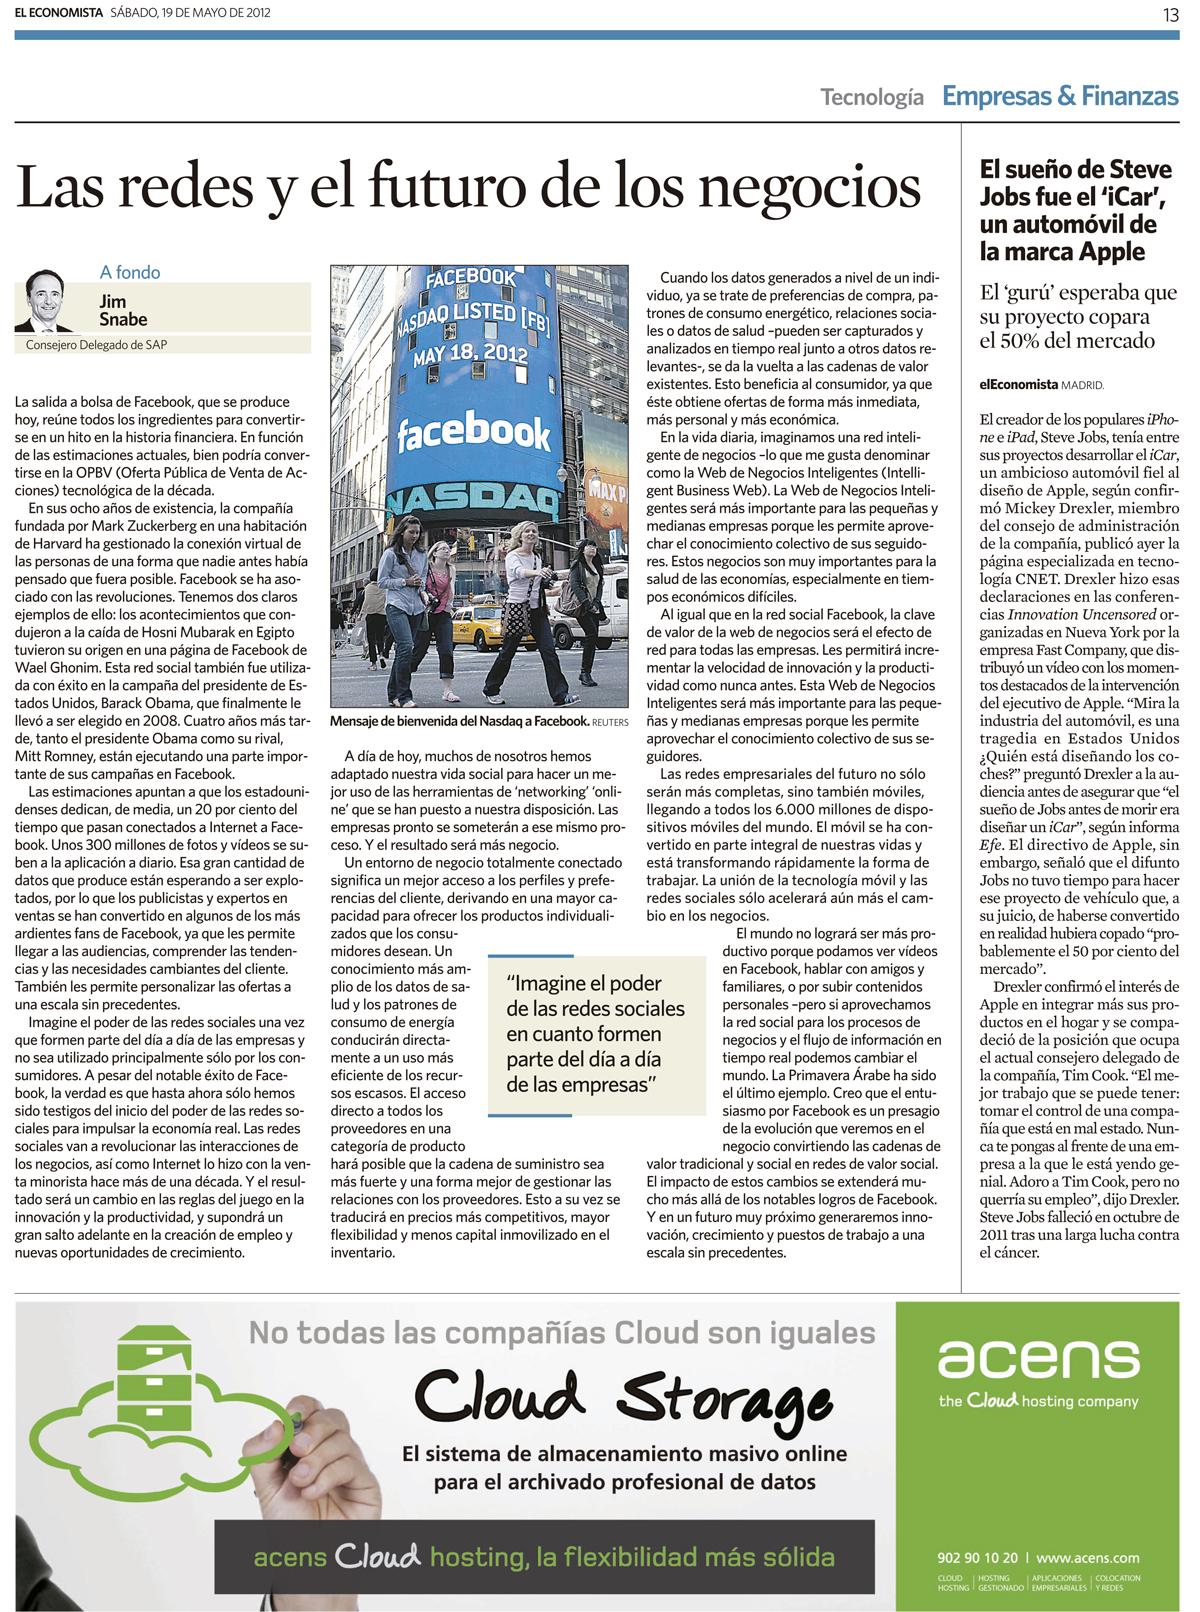 El Economista 19 de mayo 2012 - blog acens the cloud hosting company